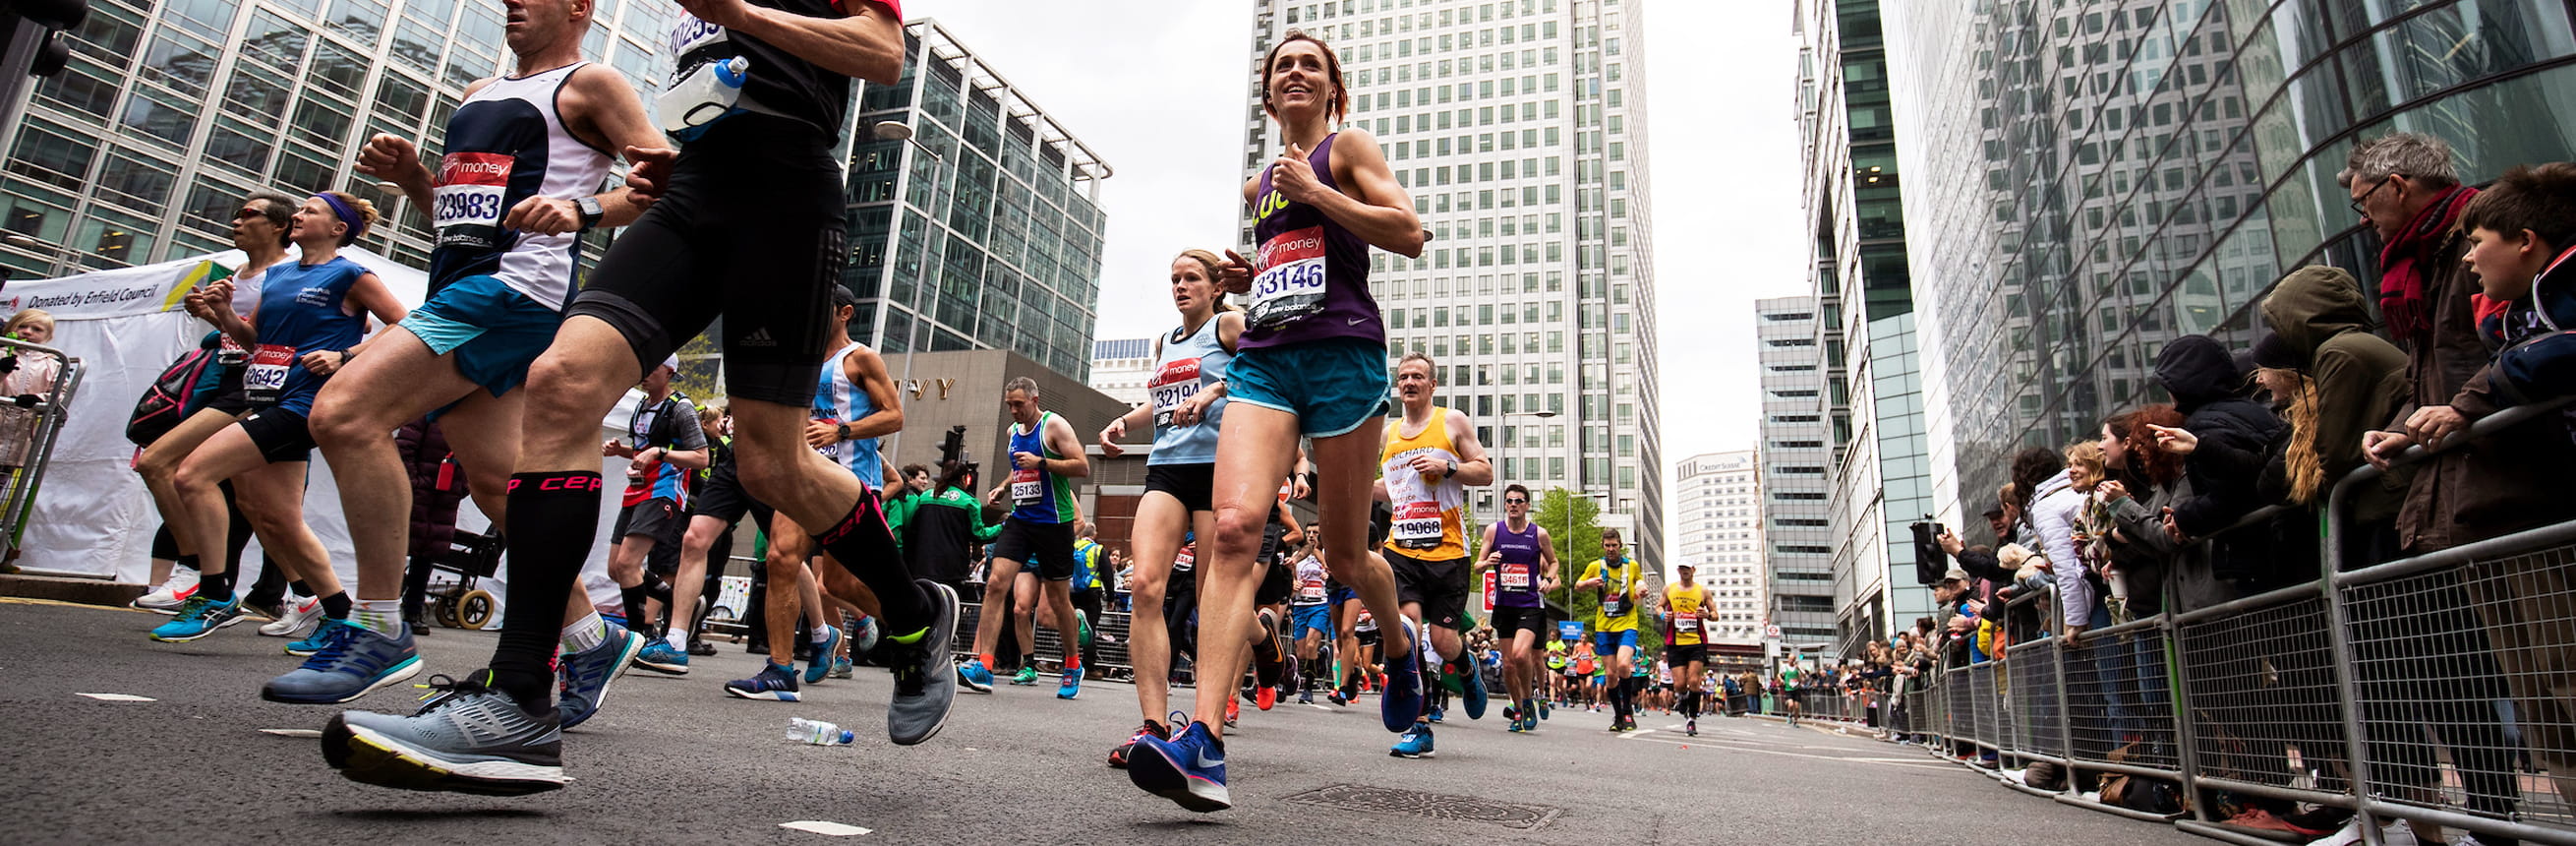 Runner passes through Canary Wharf on marathon day